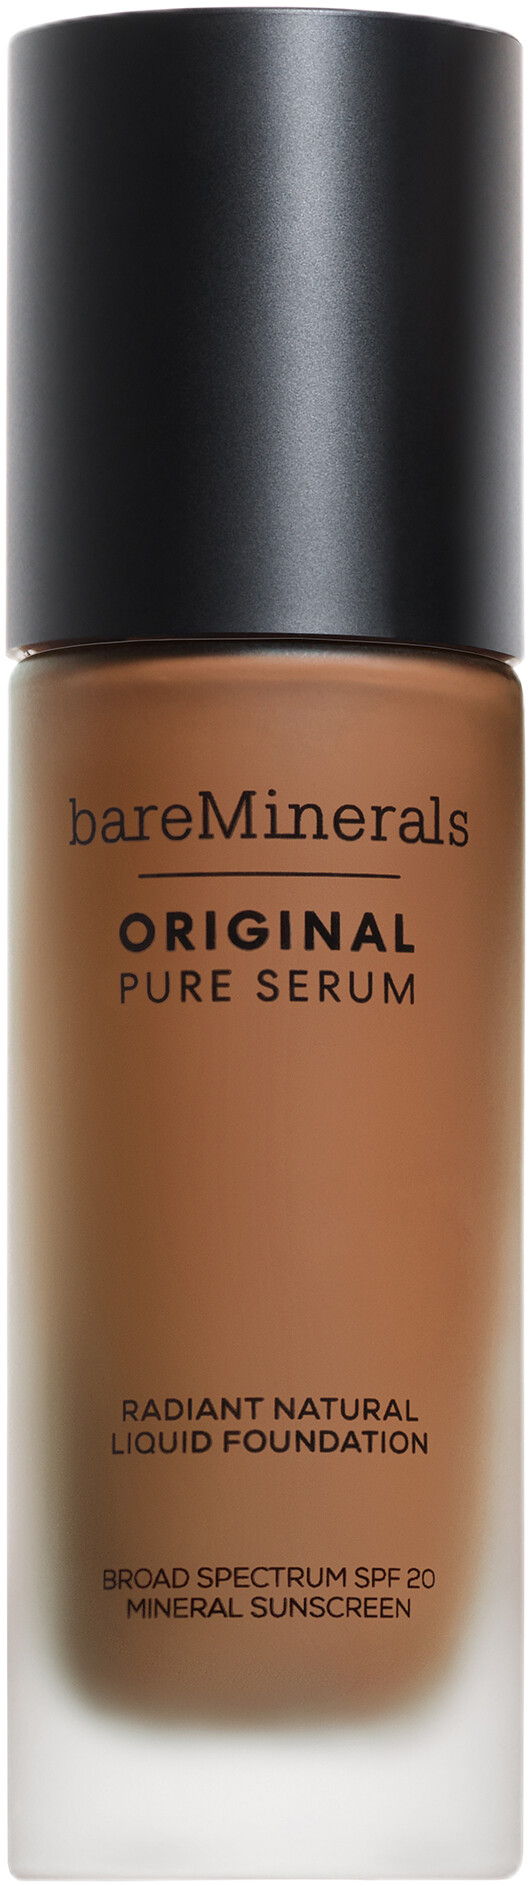 bareMinerals Original Pure Serum Radiant Natural Liquid Foundation SPF20 30ml 5 - Deep Neutral